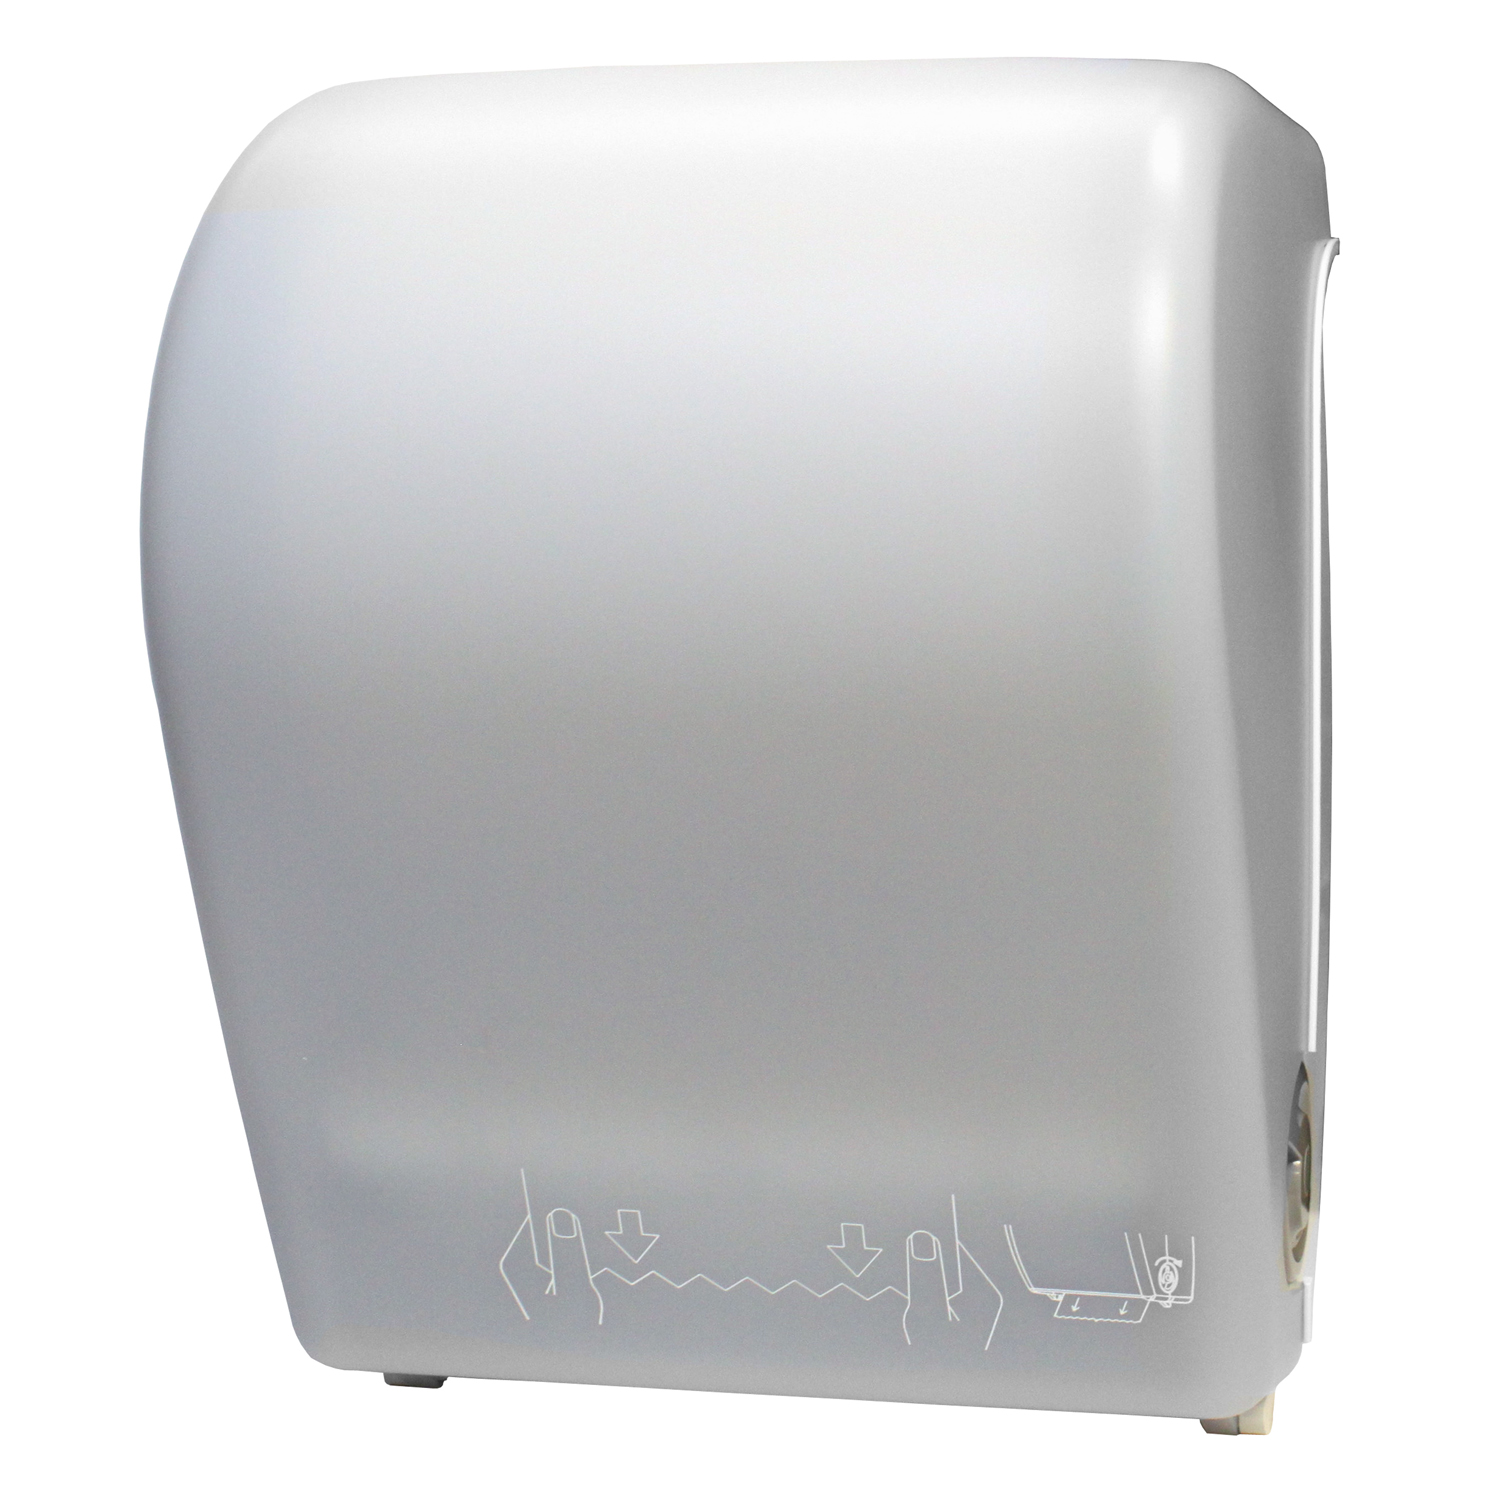 Inspire Automatic Paper Towel Dispenser - White Translucent